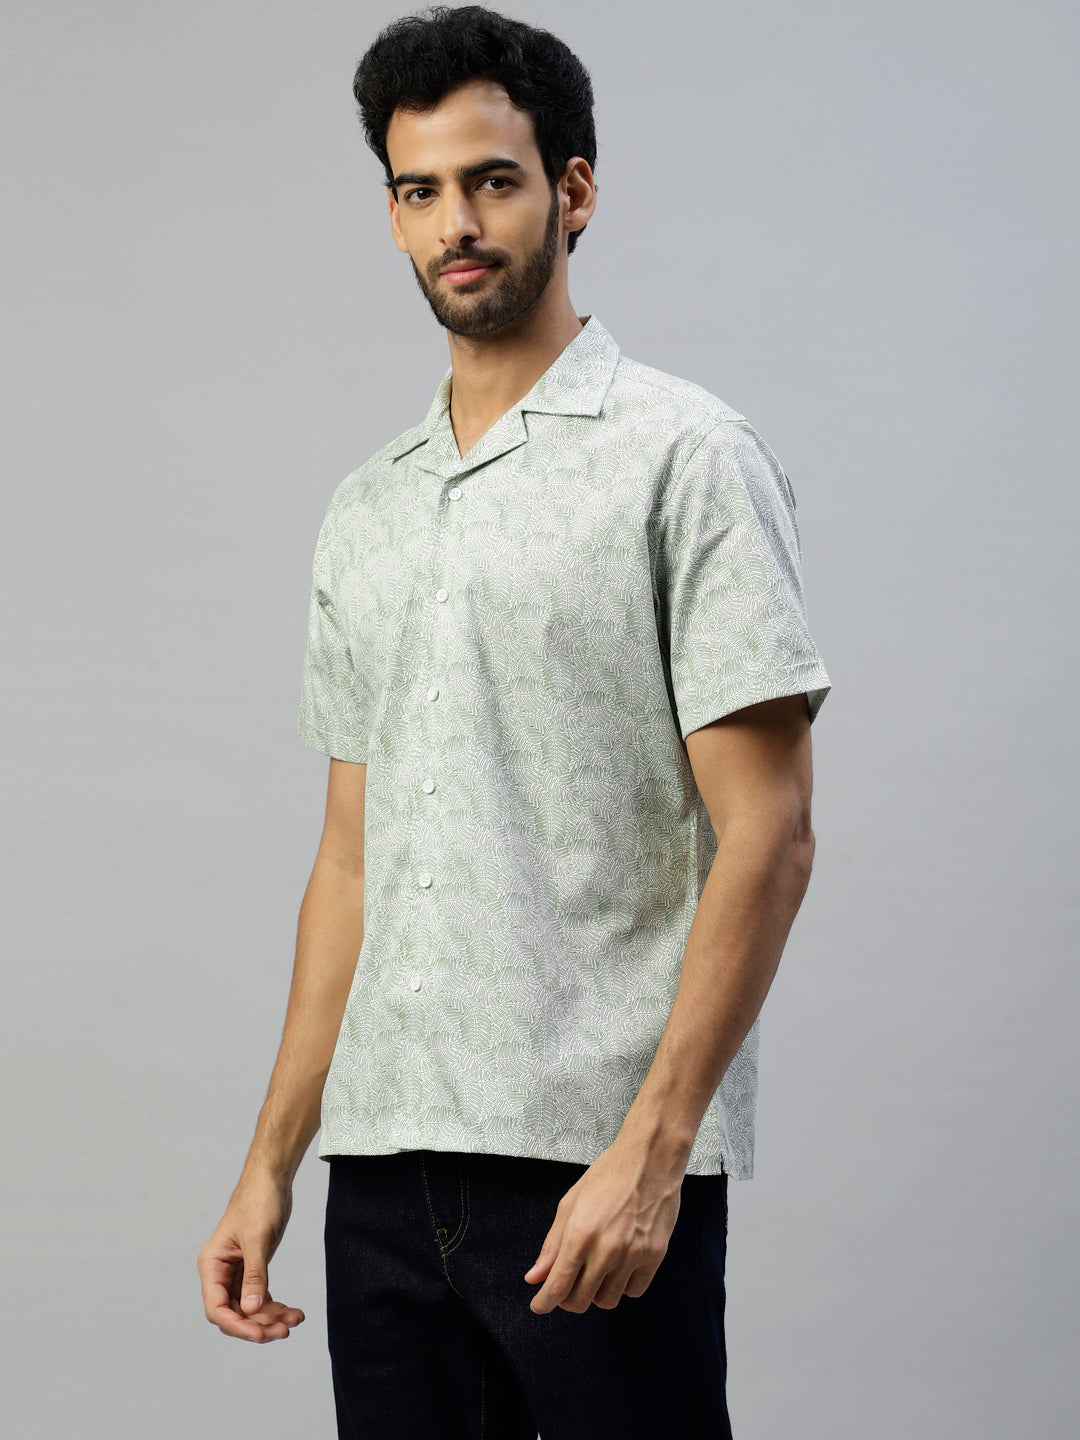 Don Vino Men's Half Sleeves Leaf Printed Shirt